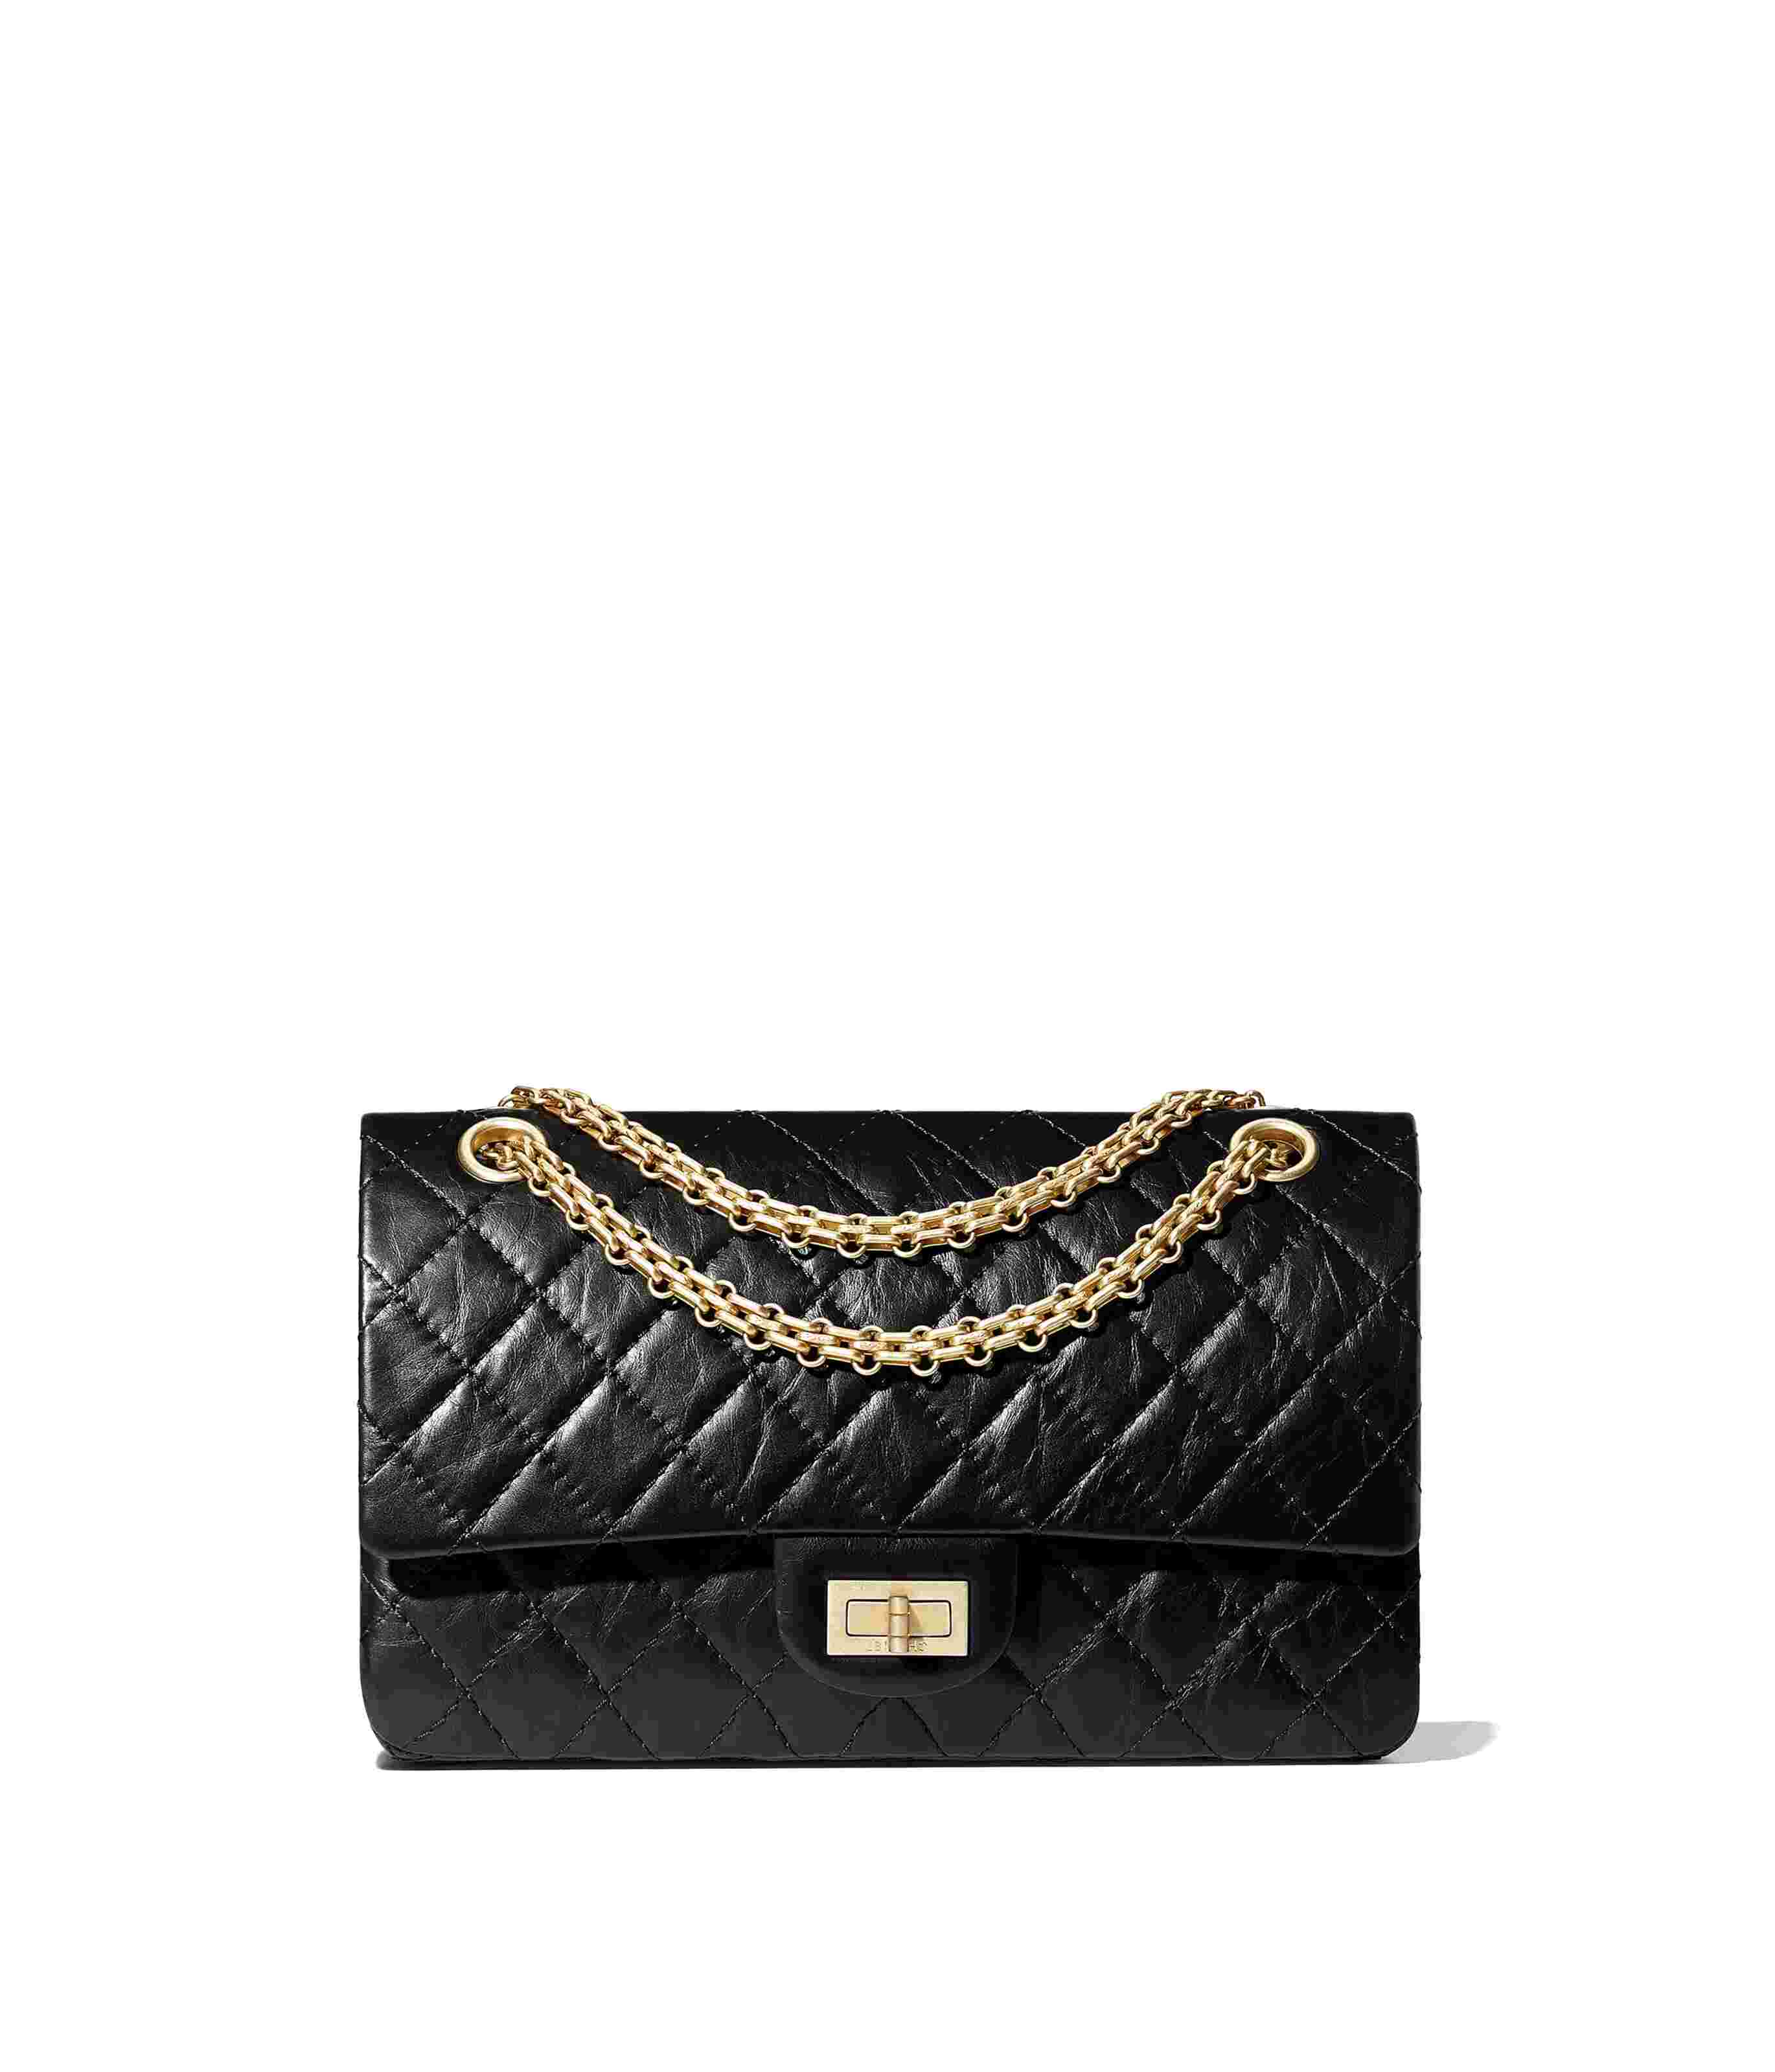 Chanel 2 55 Handbag for sale in UK | View 60 bargains